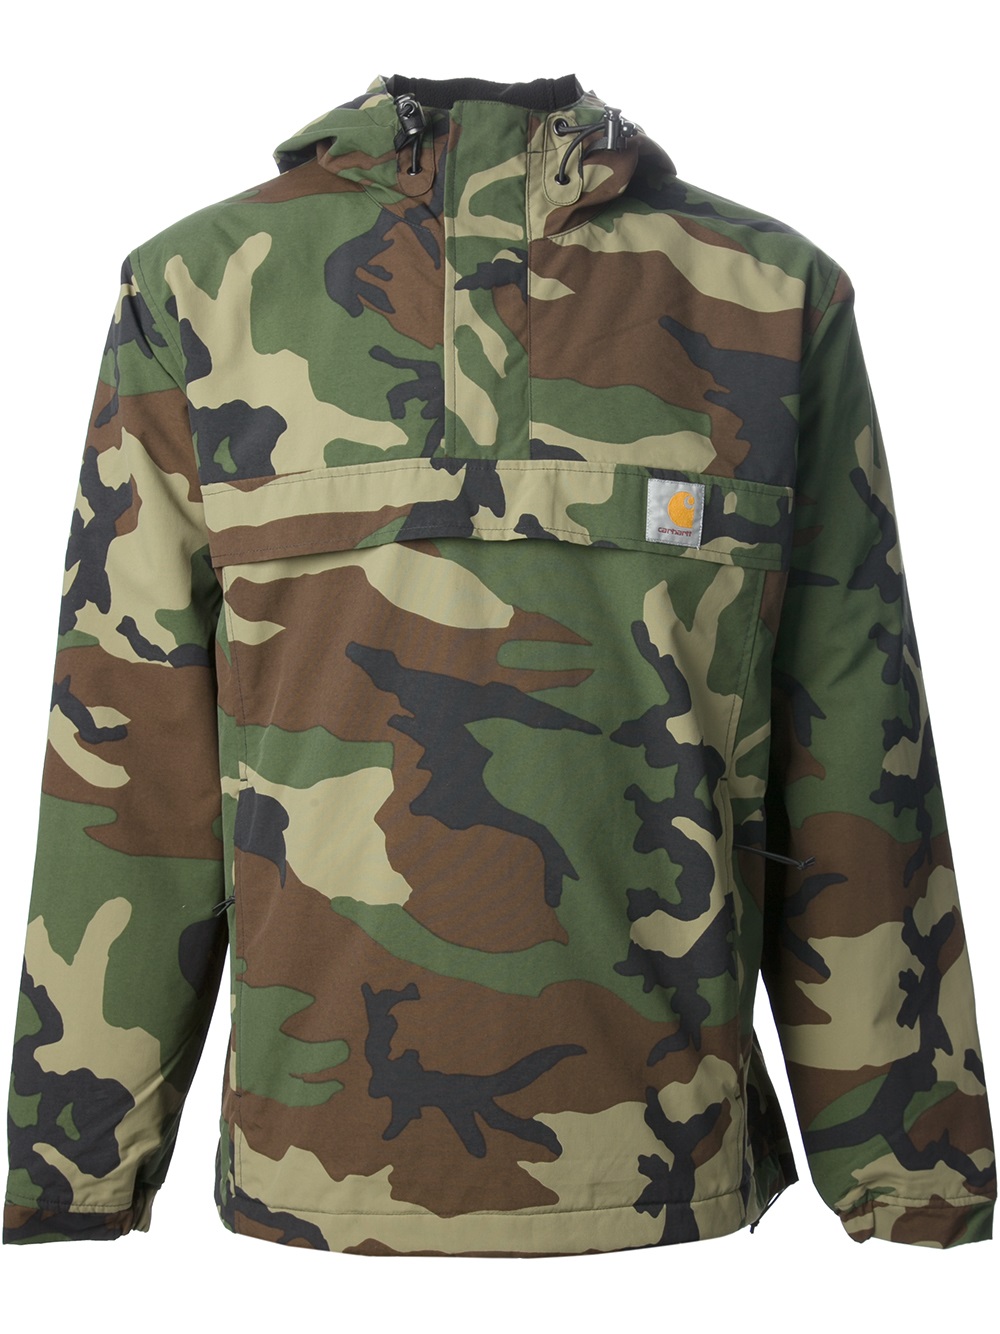 Lyst - Carhartt Nimbus Camouflage Jacket in Green for Men